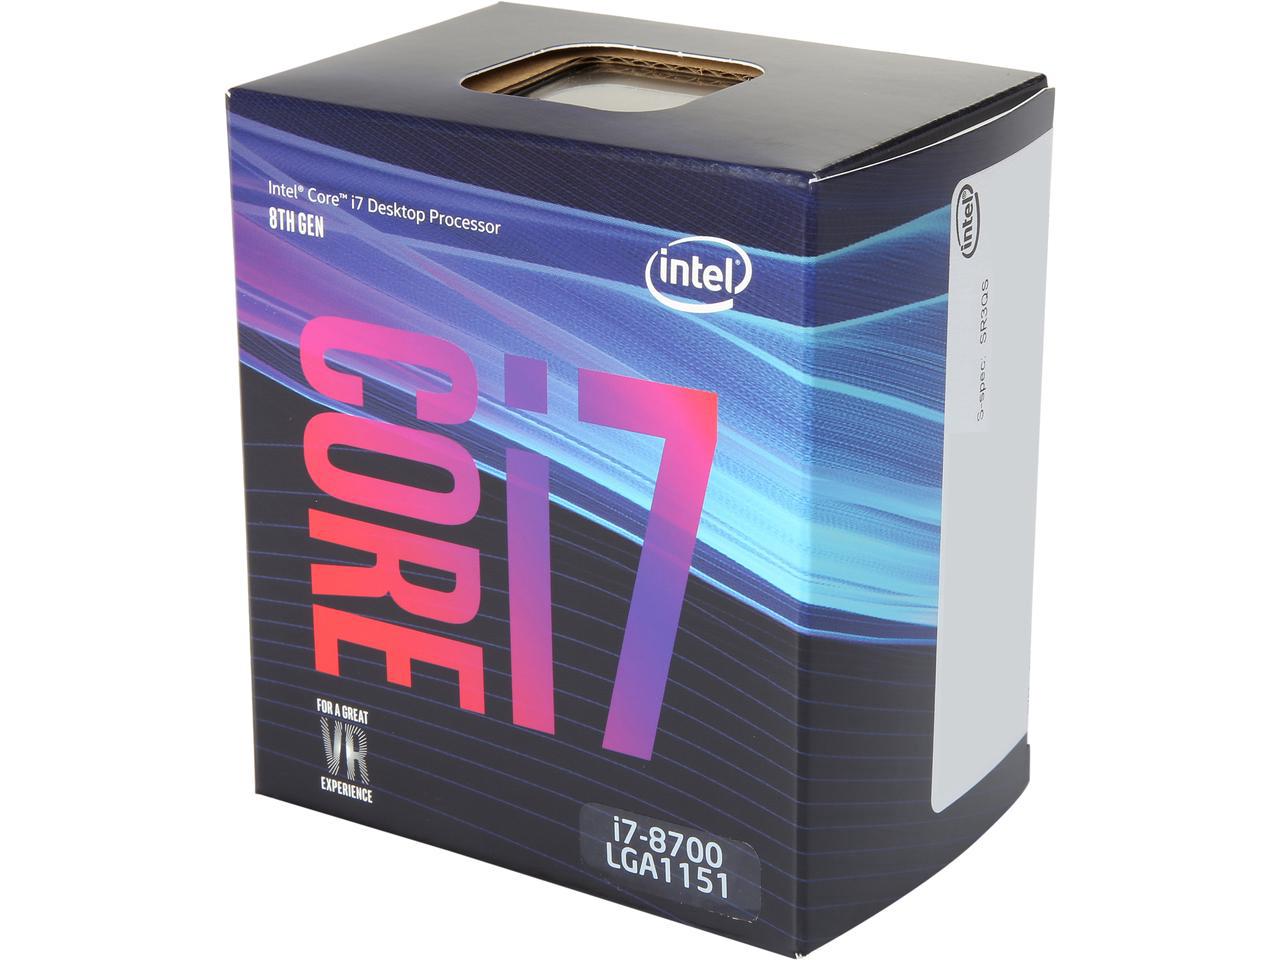 Intel Core i7-8700 product image